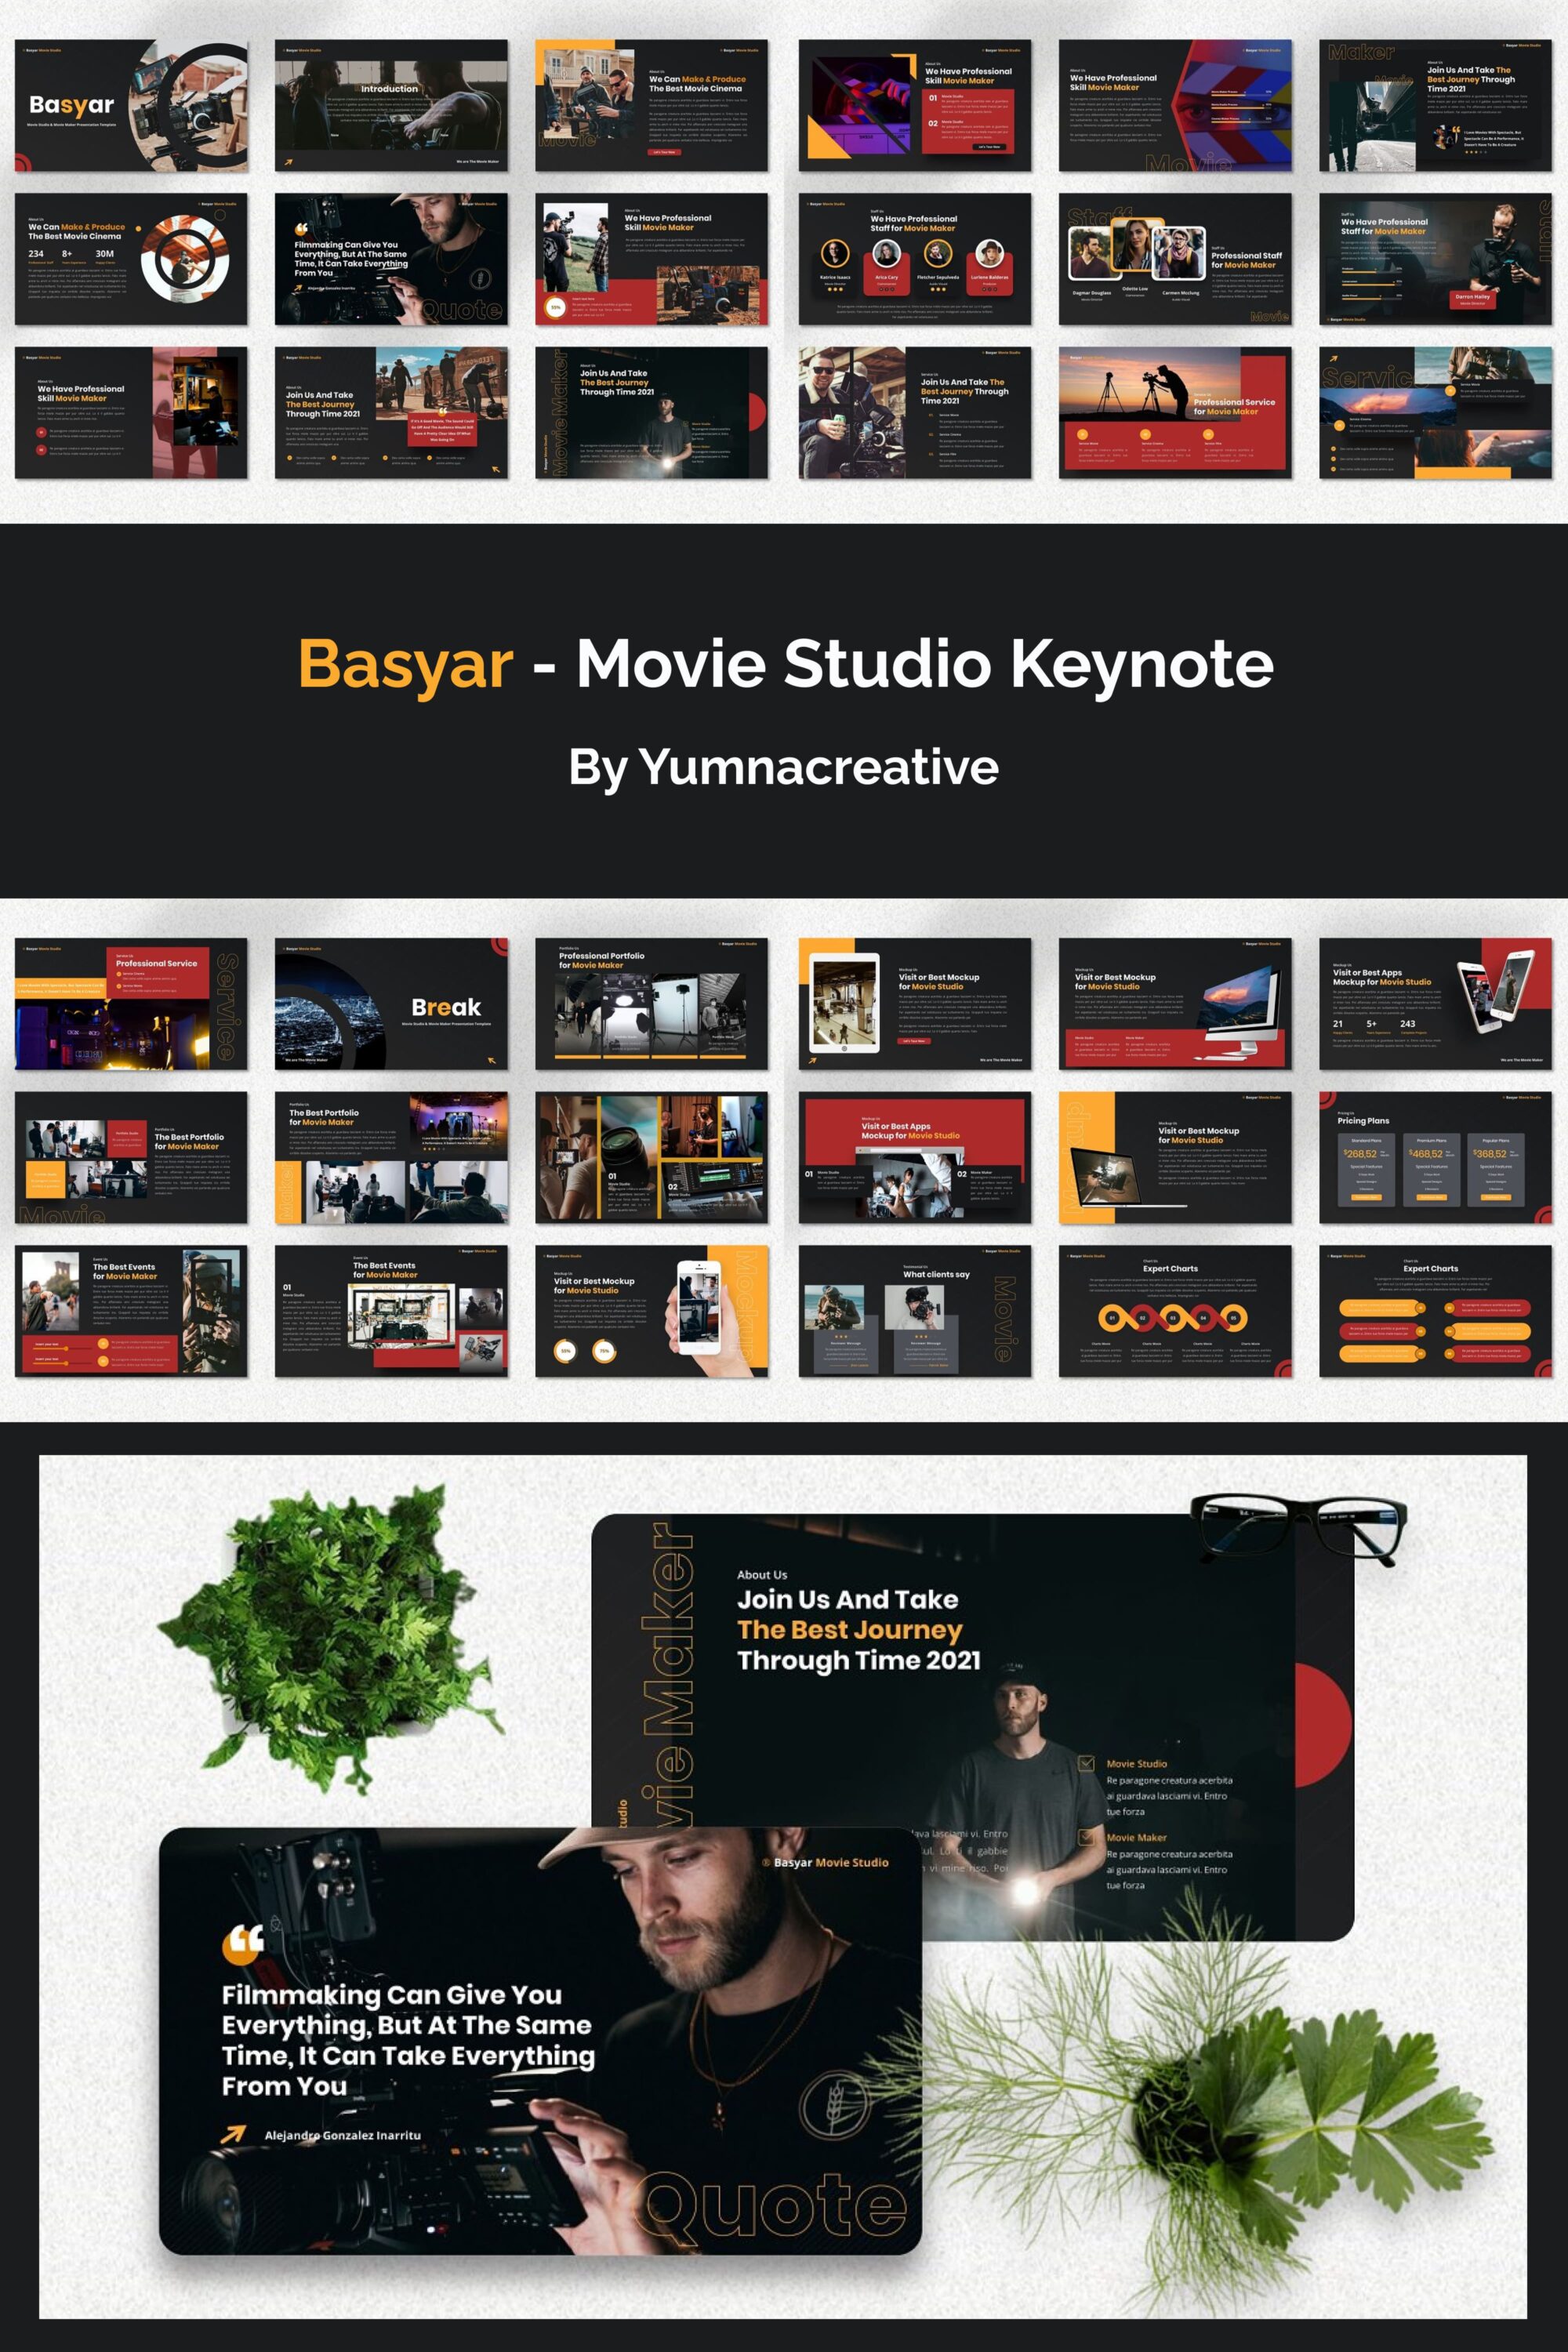 Basyar - Movie Studio Keynote - pinterest image preview.